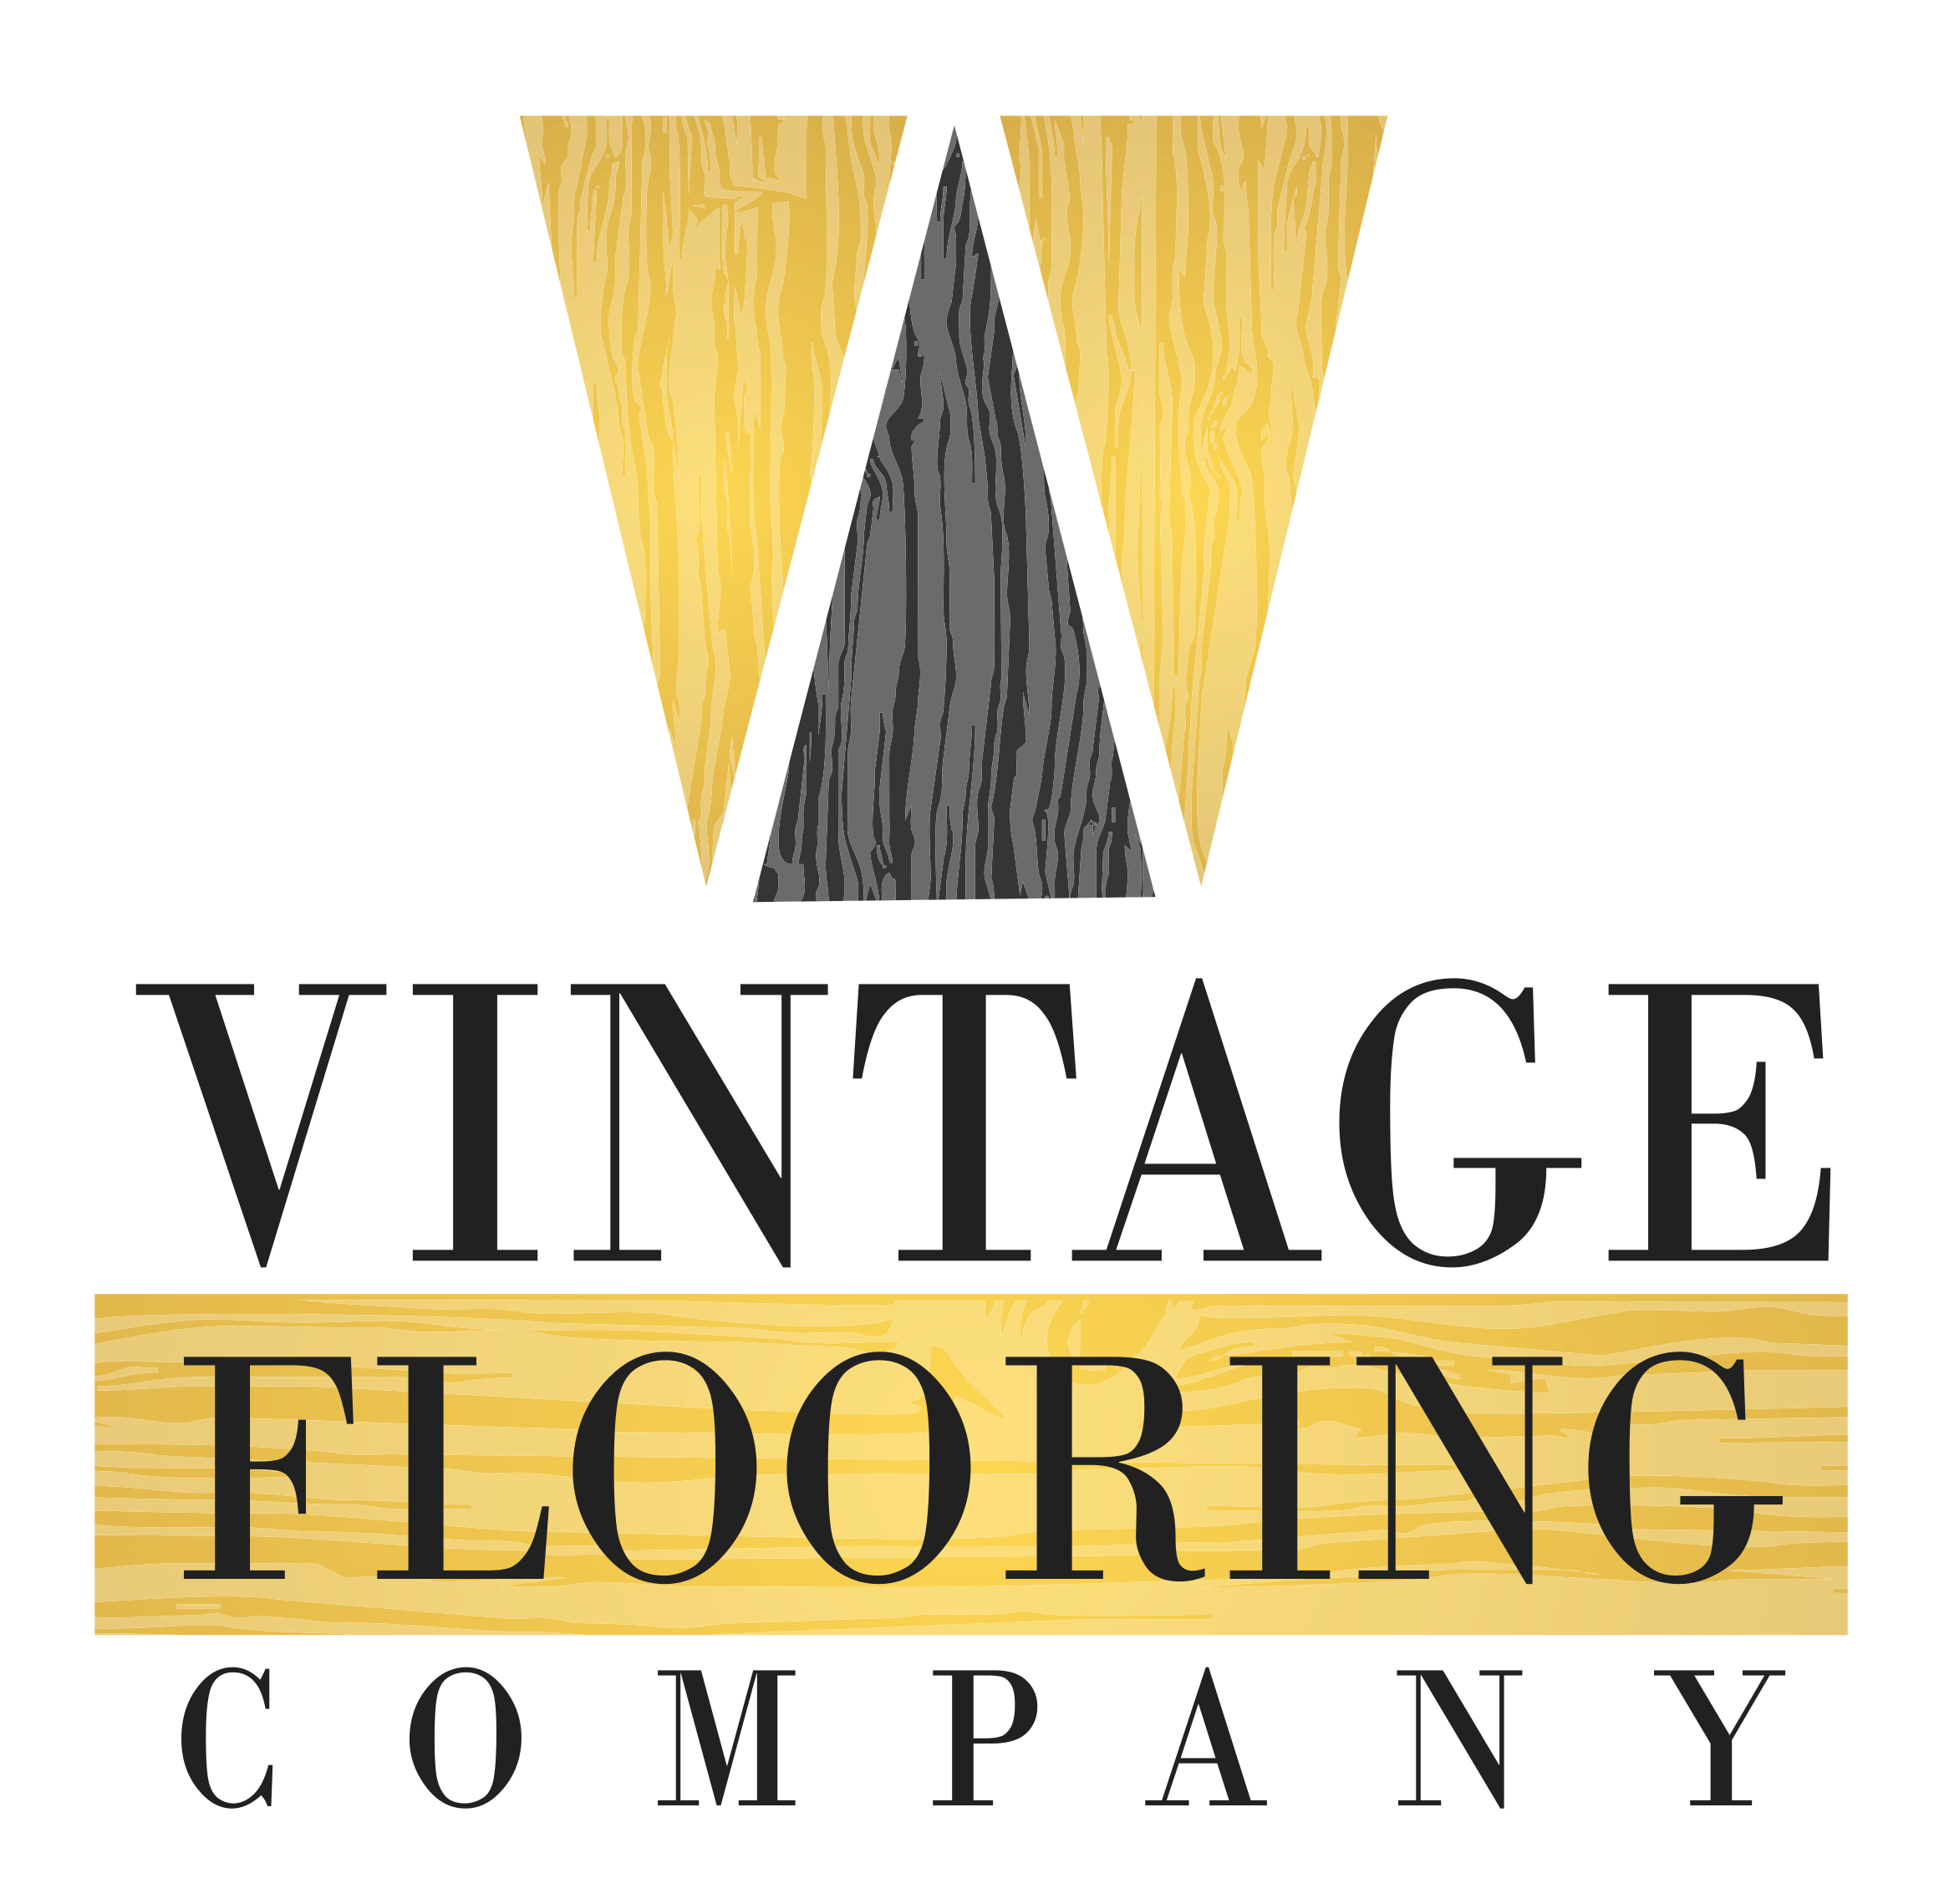 Vintage flooring